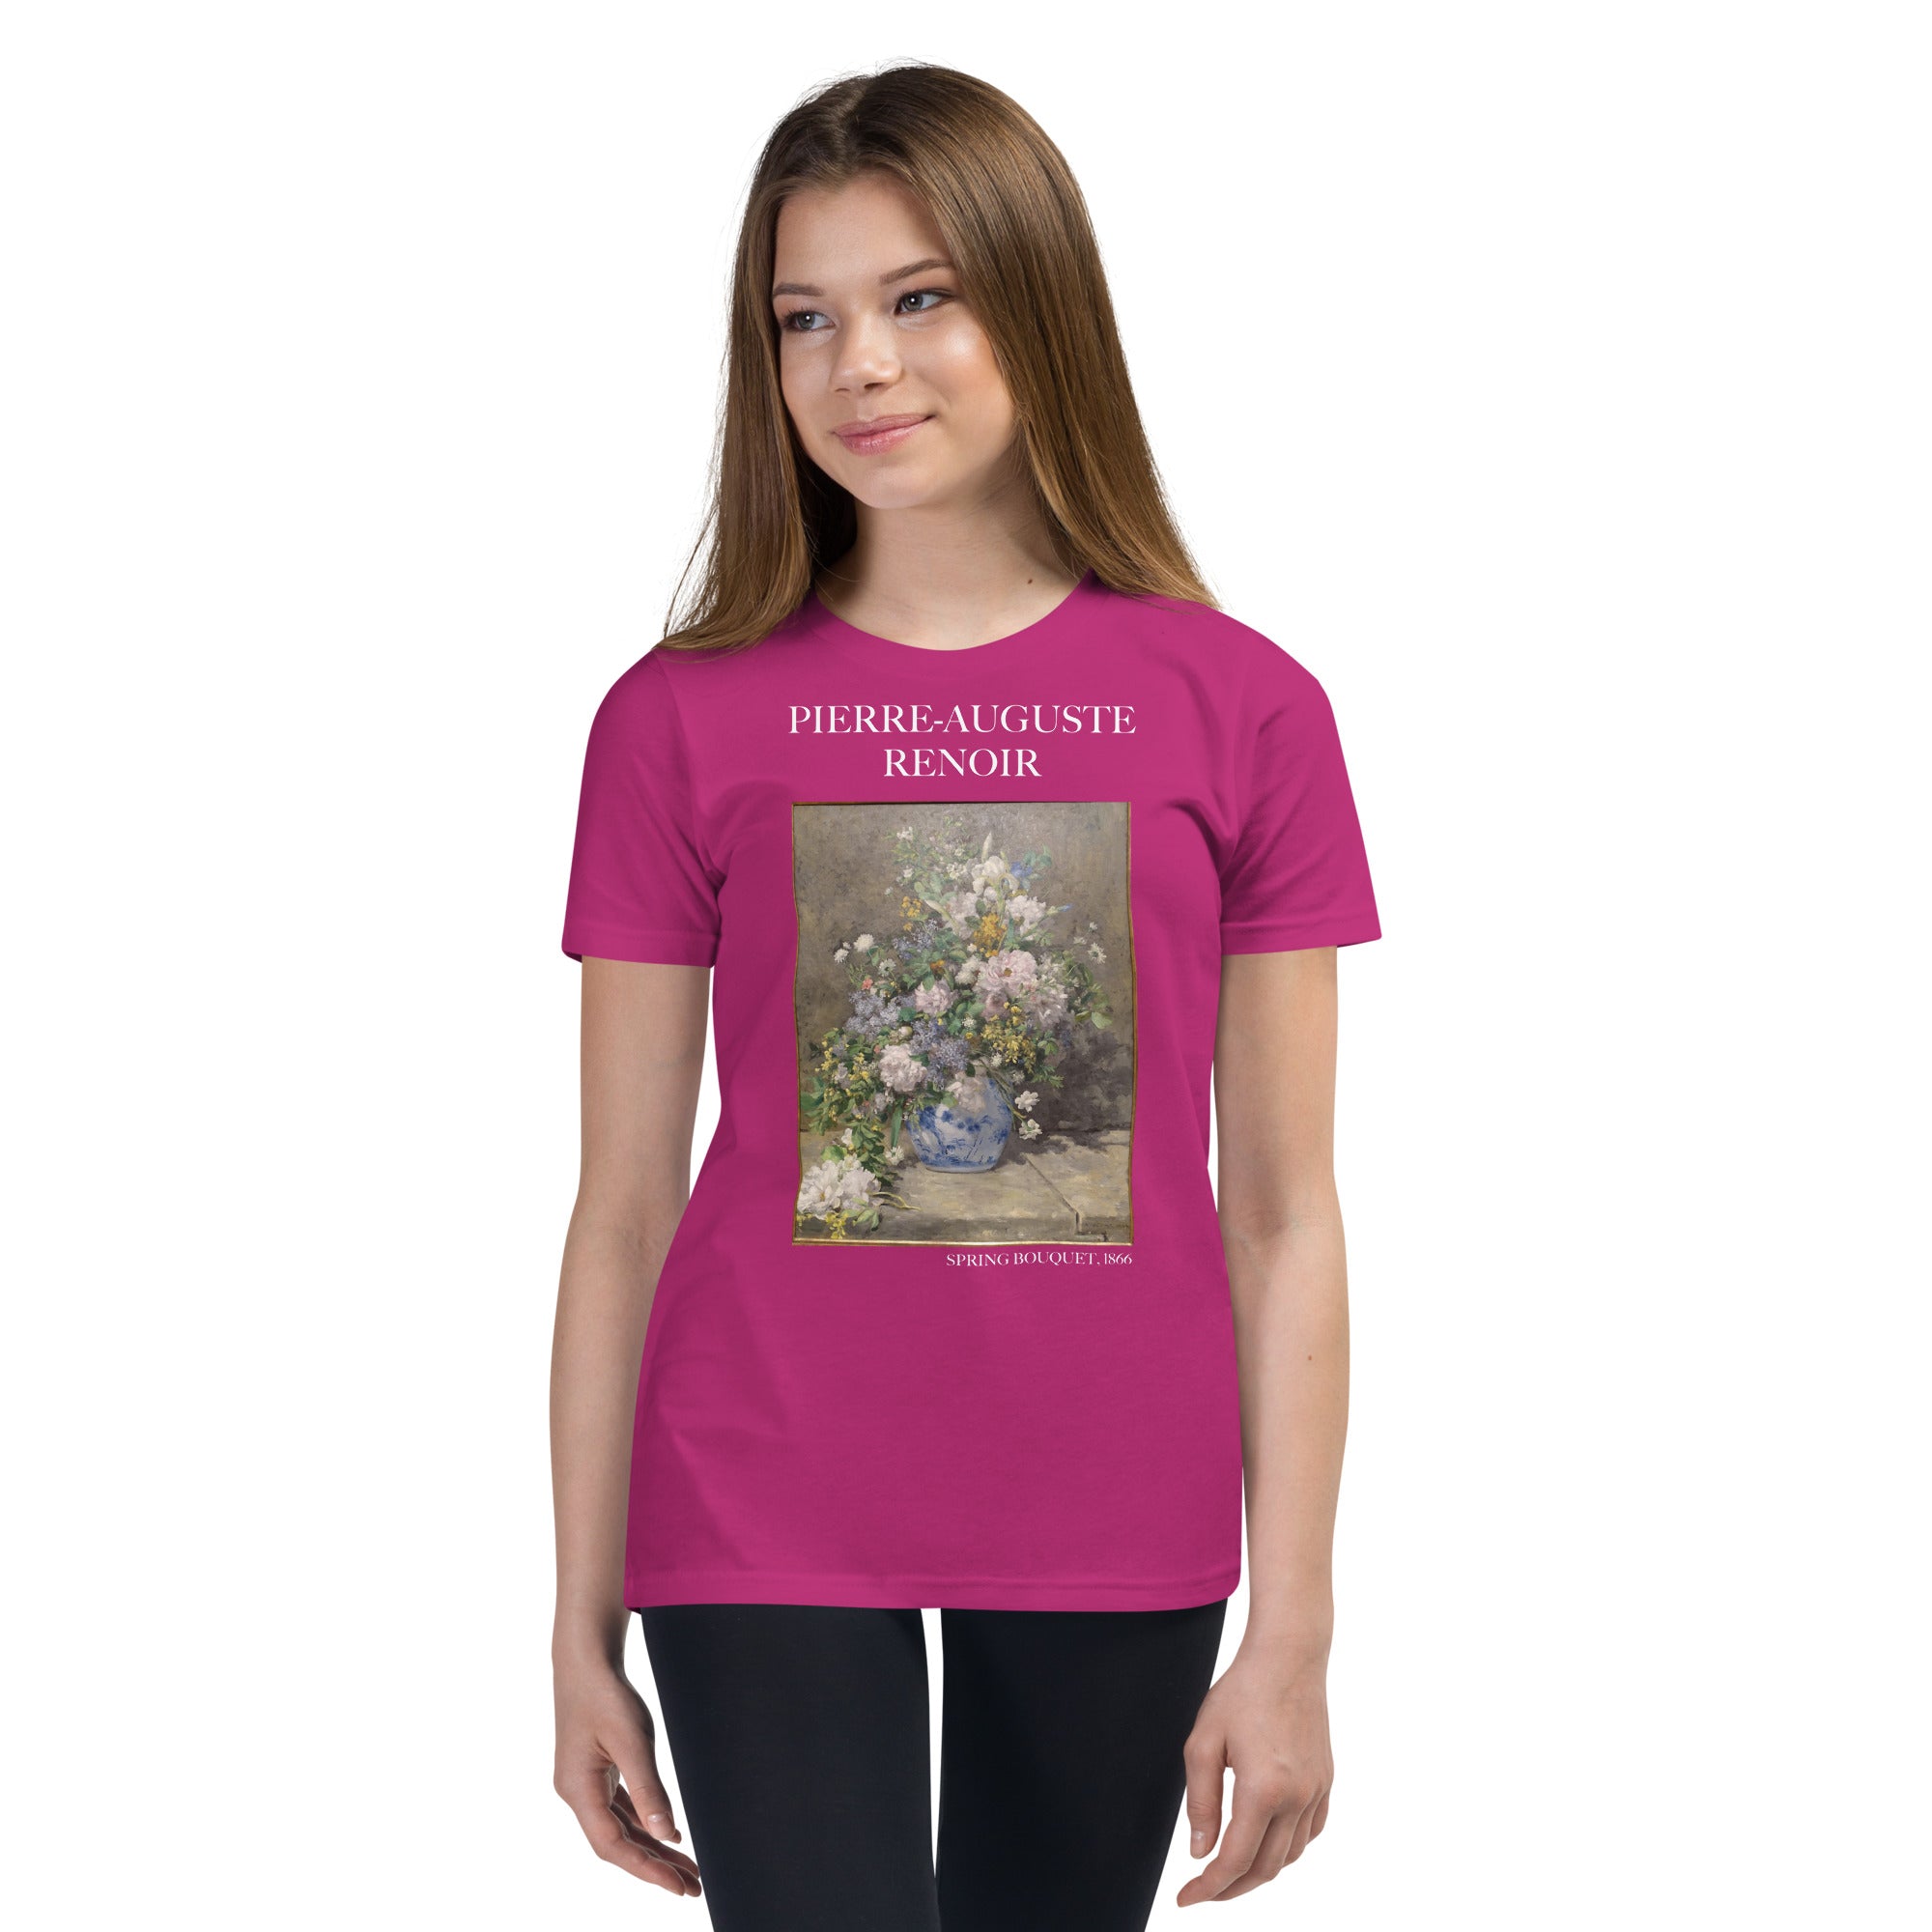 Pierre-Auguste Renoir 'Frühlingsstrauß' Berühmtes Gemälde Kurzärmeliges T-Shirt | Premium Jugend Kunst T-Shirt